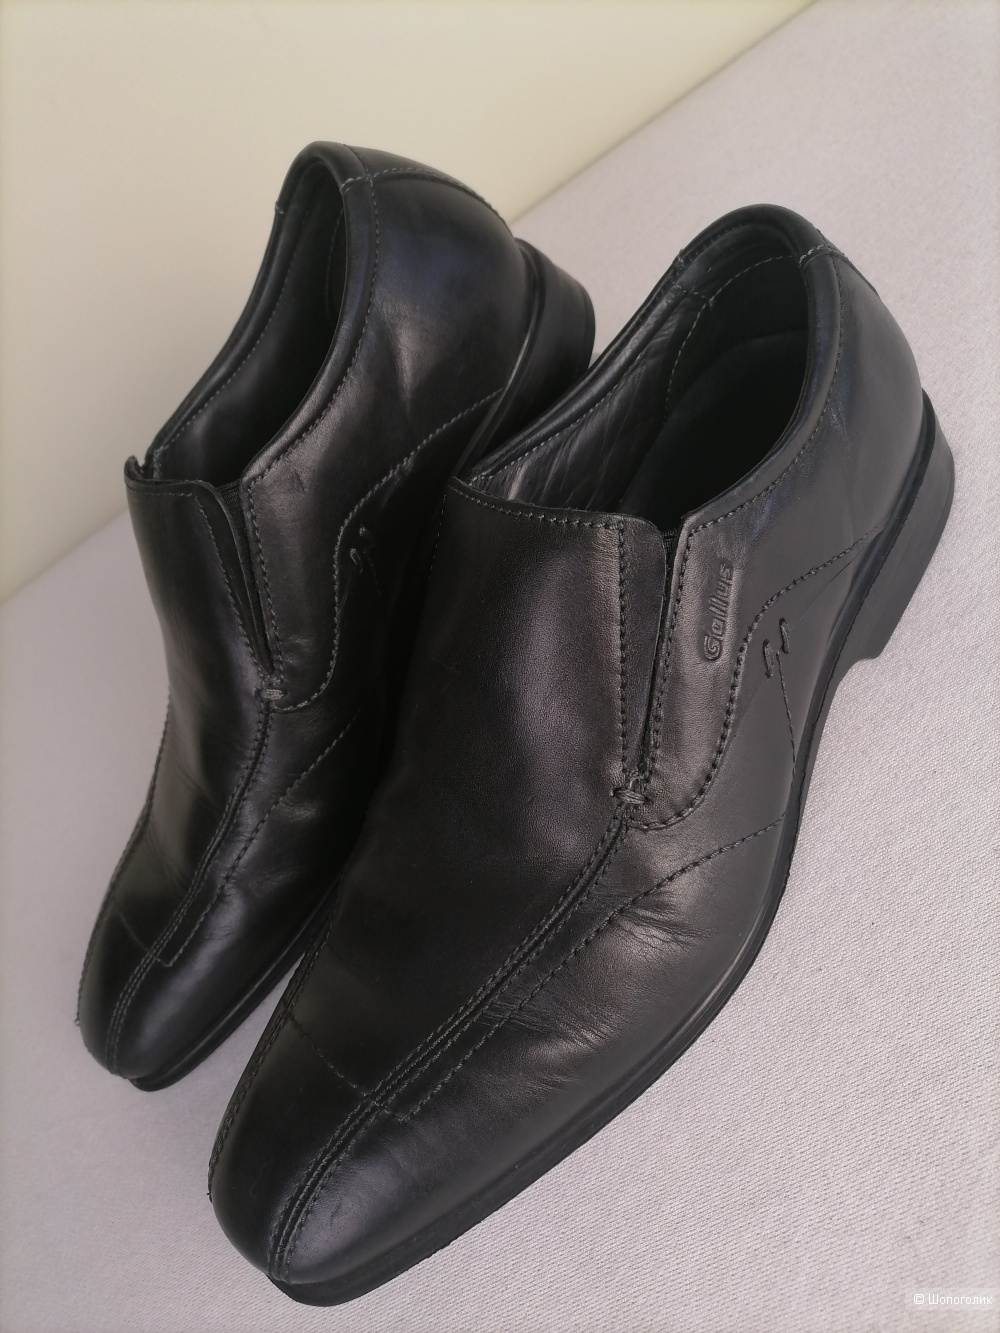 Ботинки туфли Gallus Geox Respira на дышащей подошве, 43 Ru/Euro